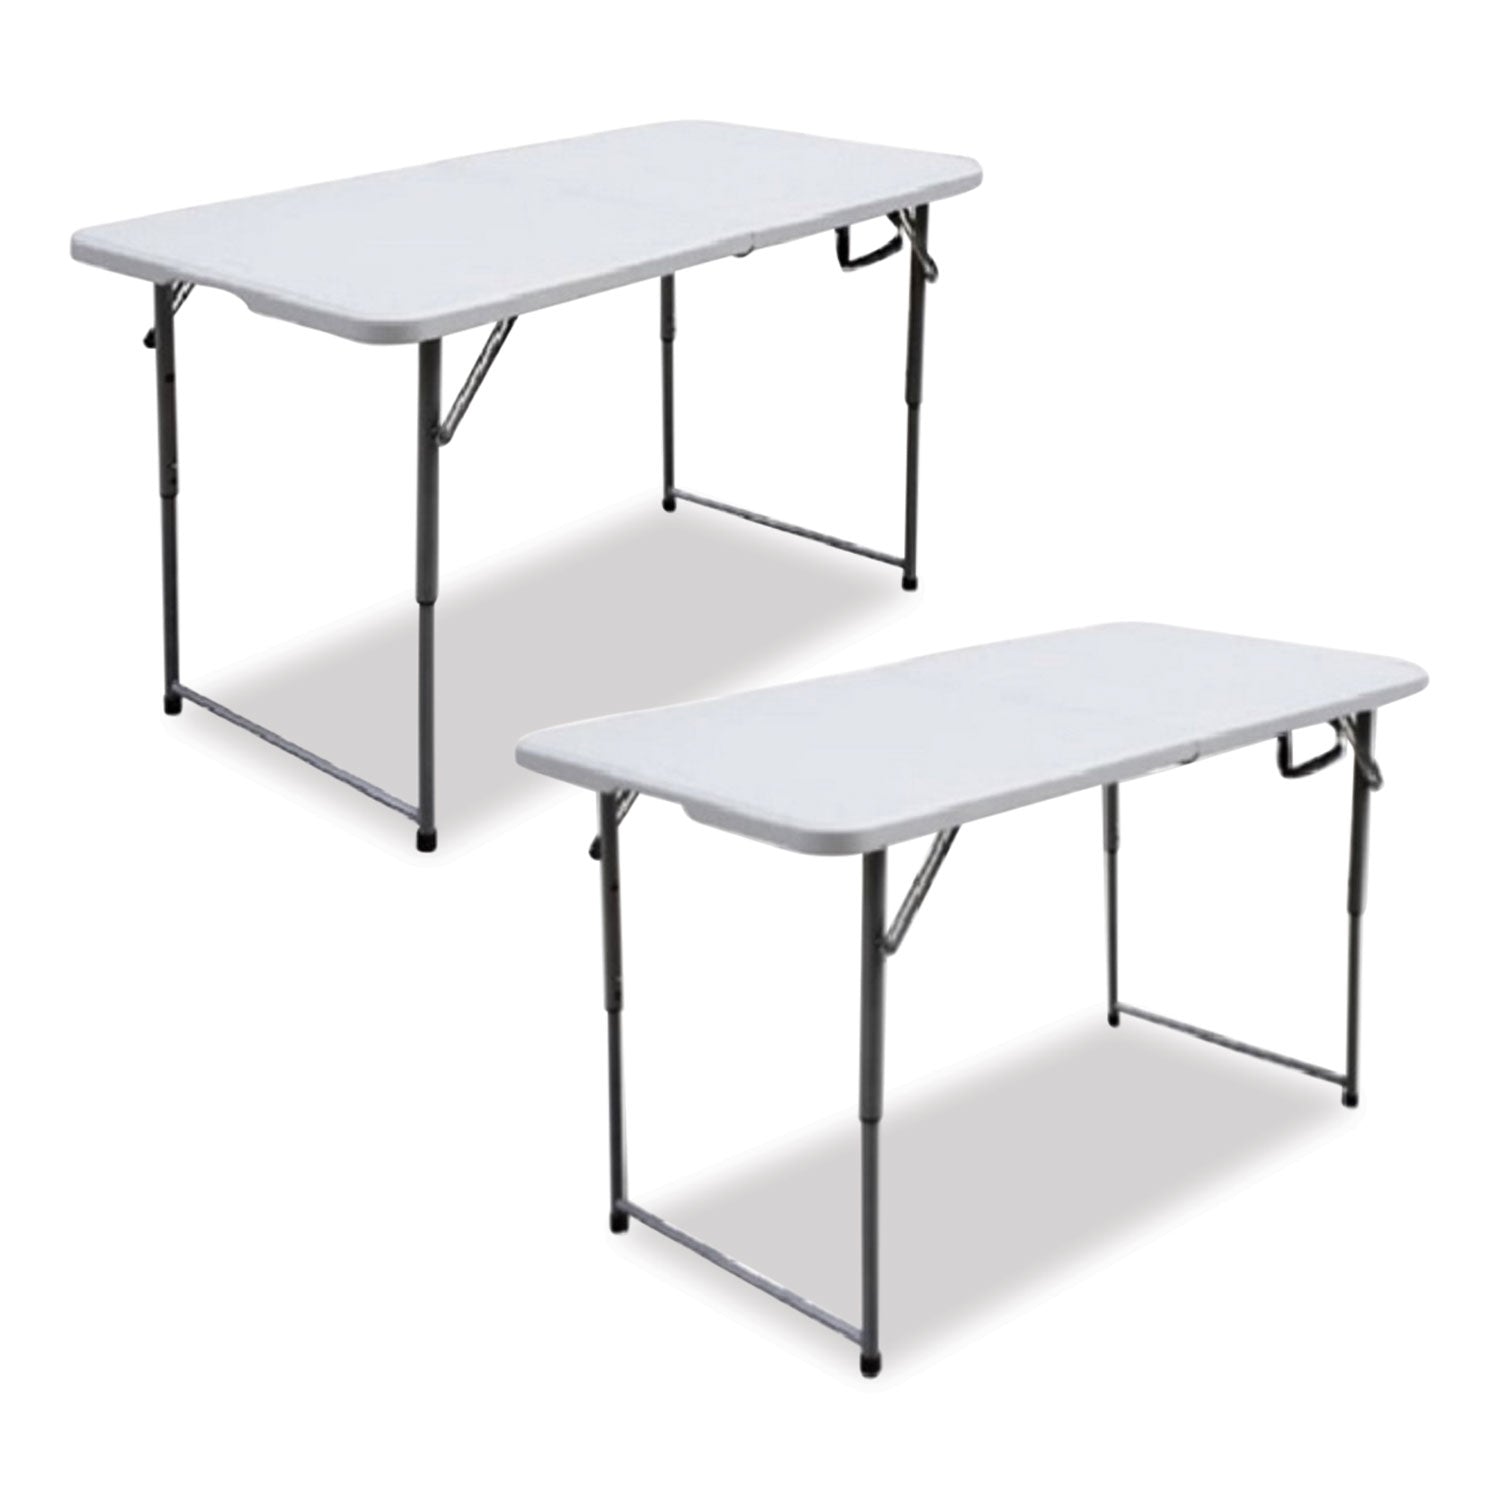 bifold-resin-folding-table-rectangular-48-x-236-x-291-white-granite-top-gray-base-legs-2-pack_ice61243 - 1